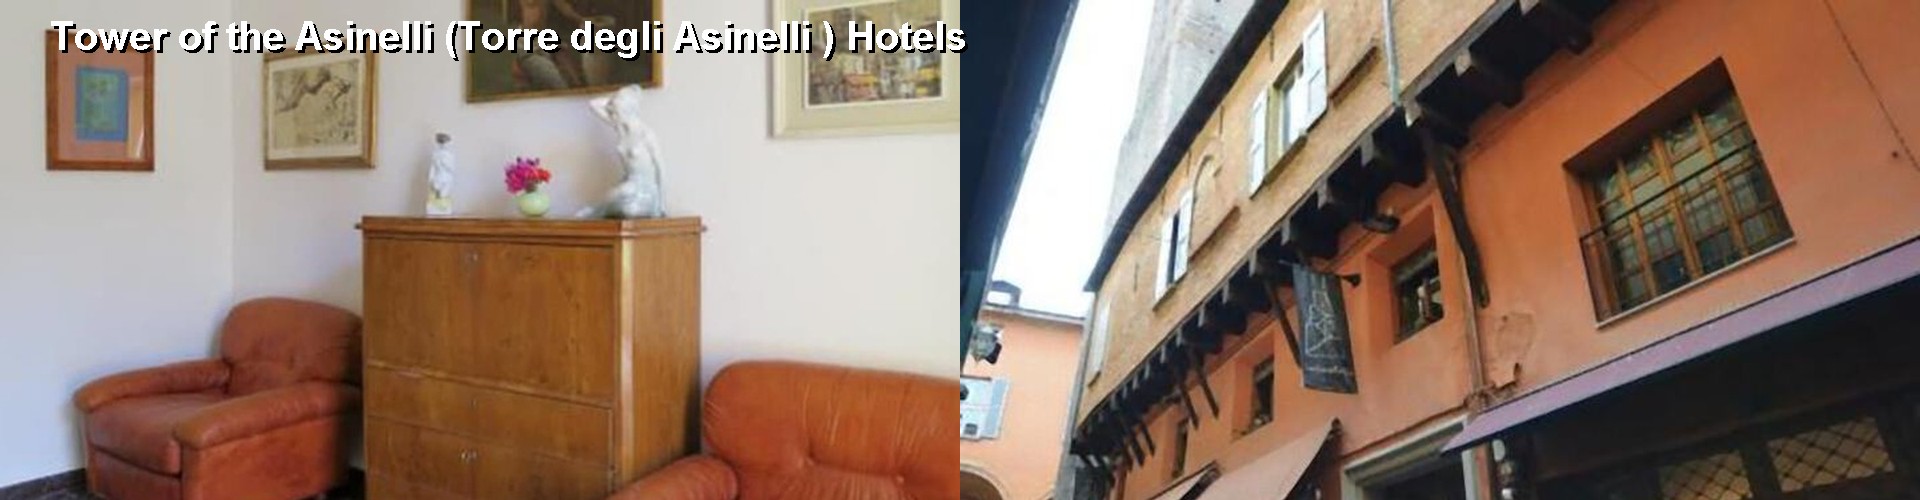 5 Best Hotels near Tower of the Asinelli (Torre degli Asinelli )